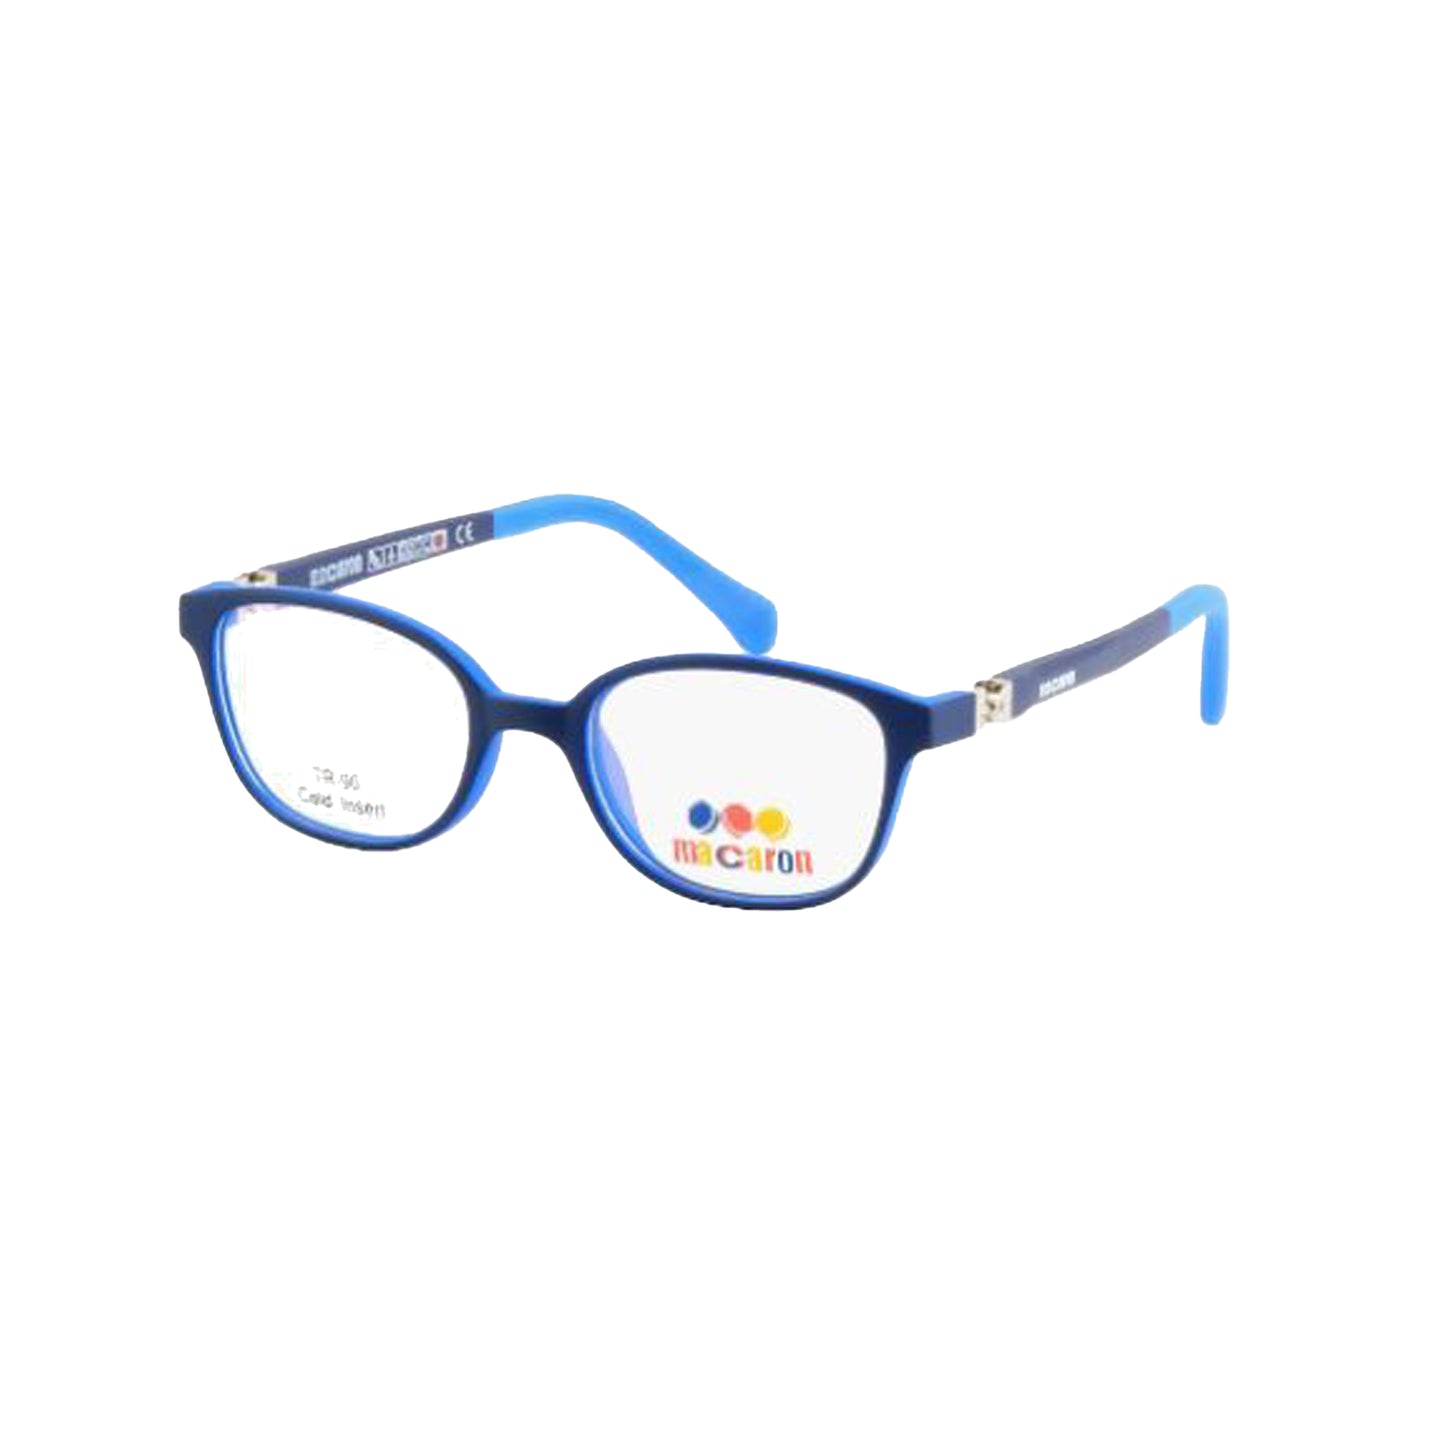 Macaron Blue Round Acetate Full Rim Eyeglasses for Kids